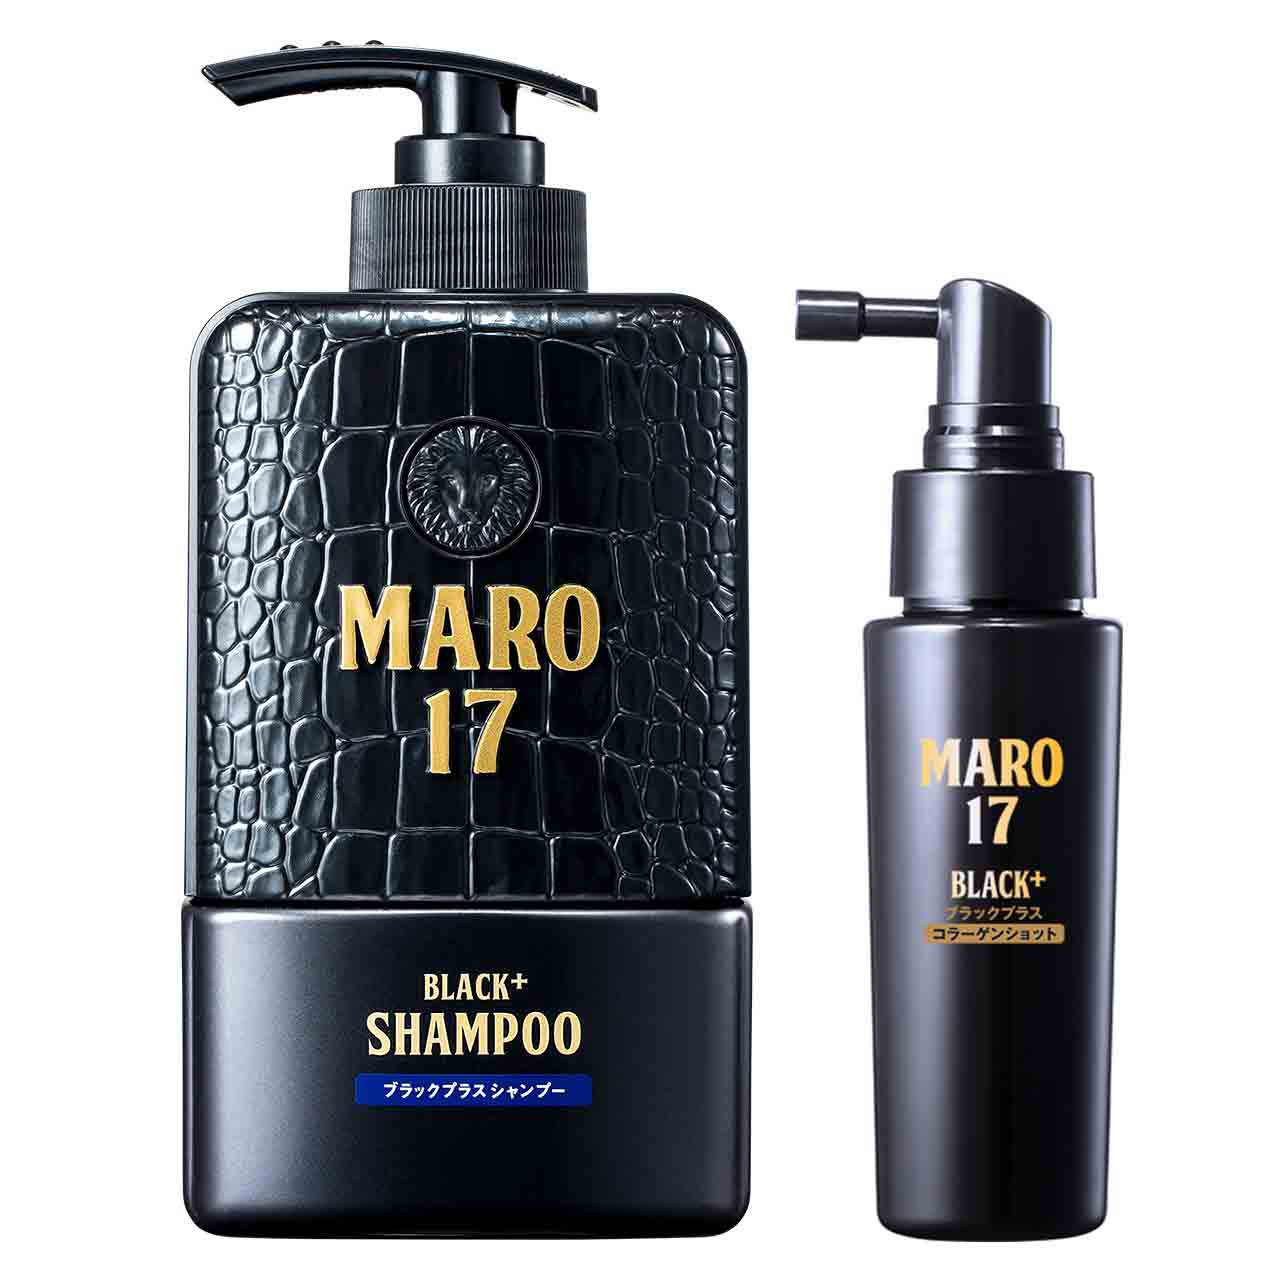 MARO17 Black+ Shampoo & Collagen Shot Set